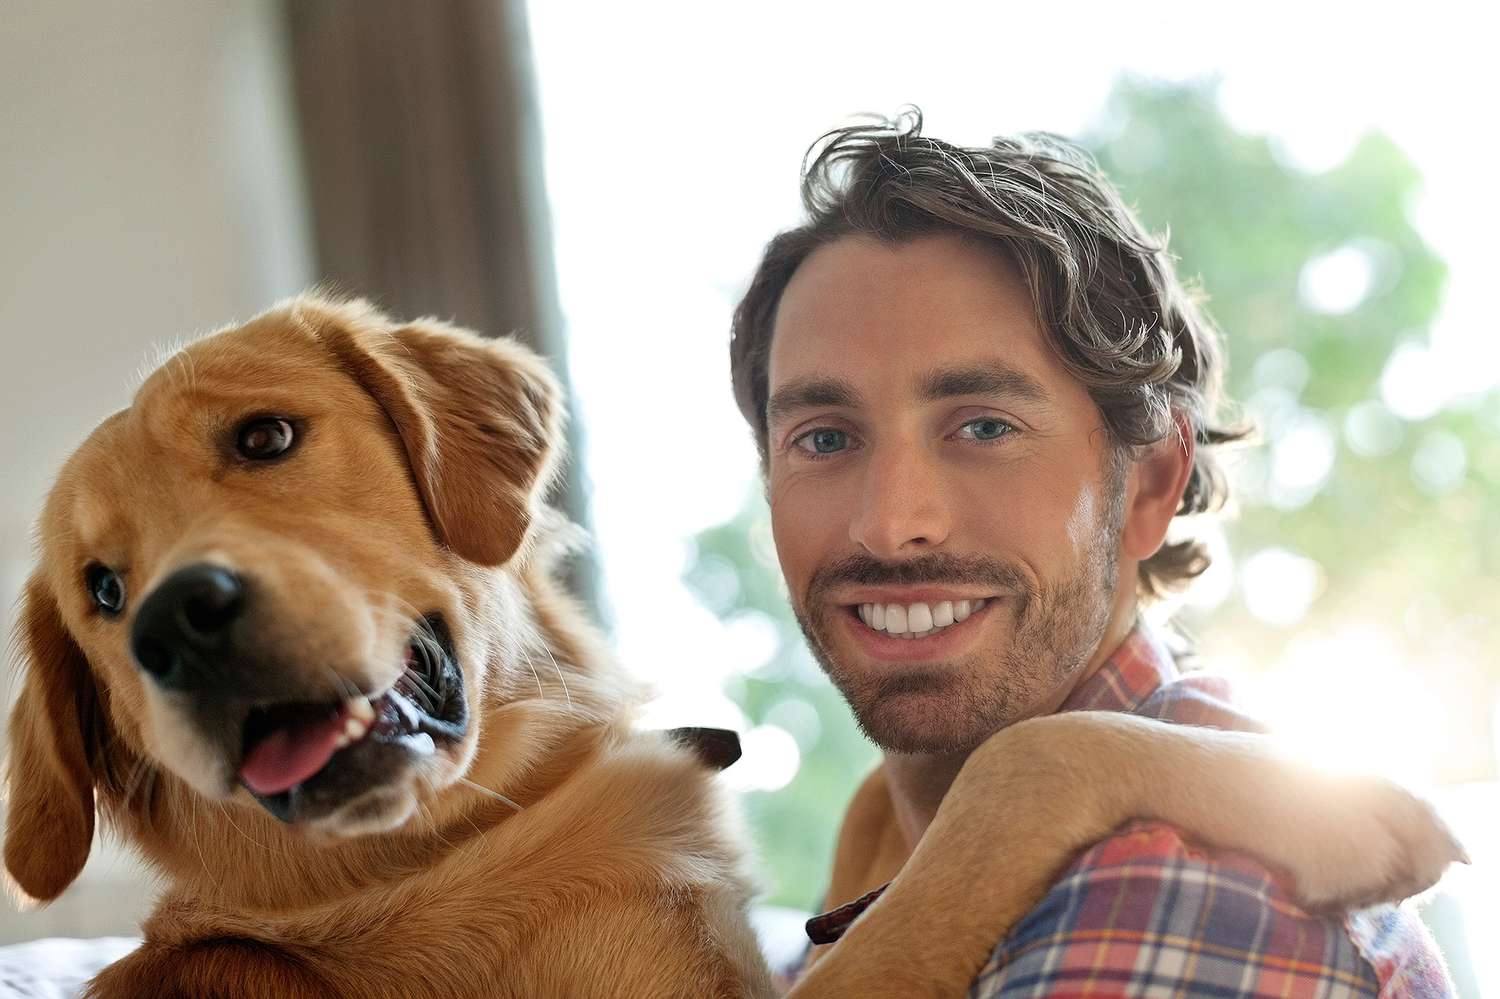 Smiling man petting dog indoors